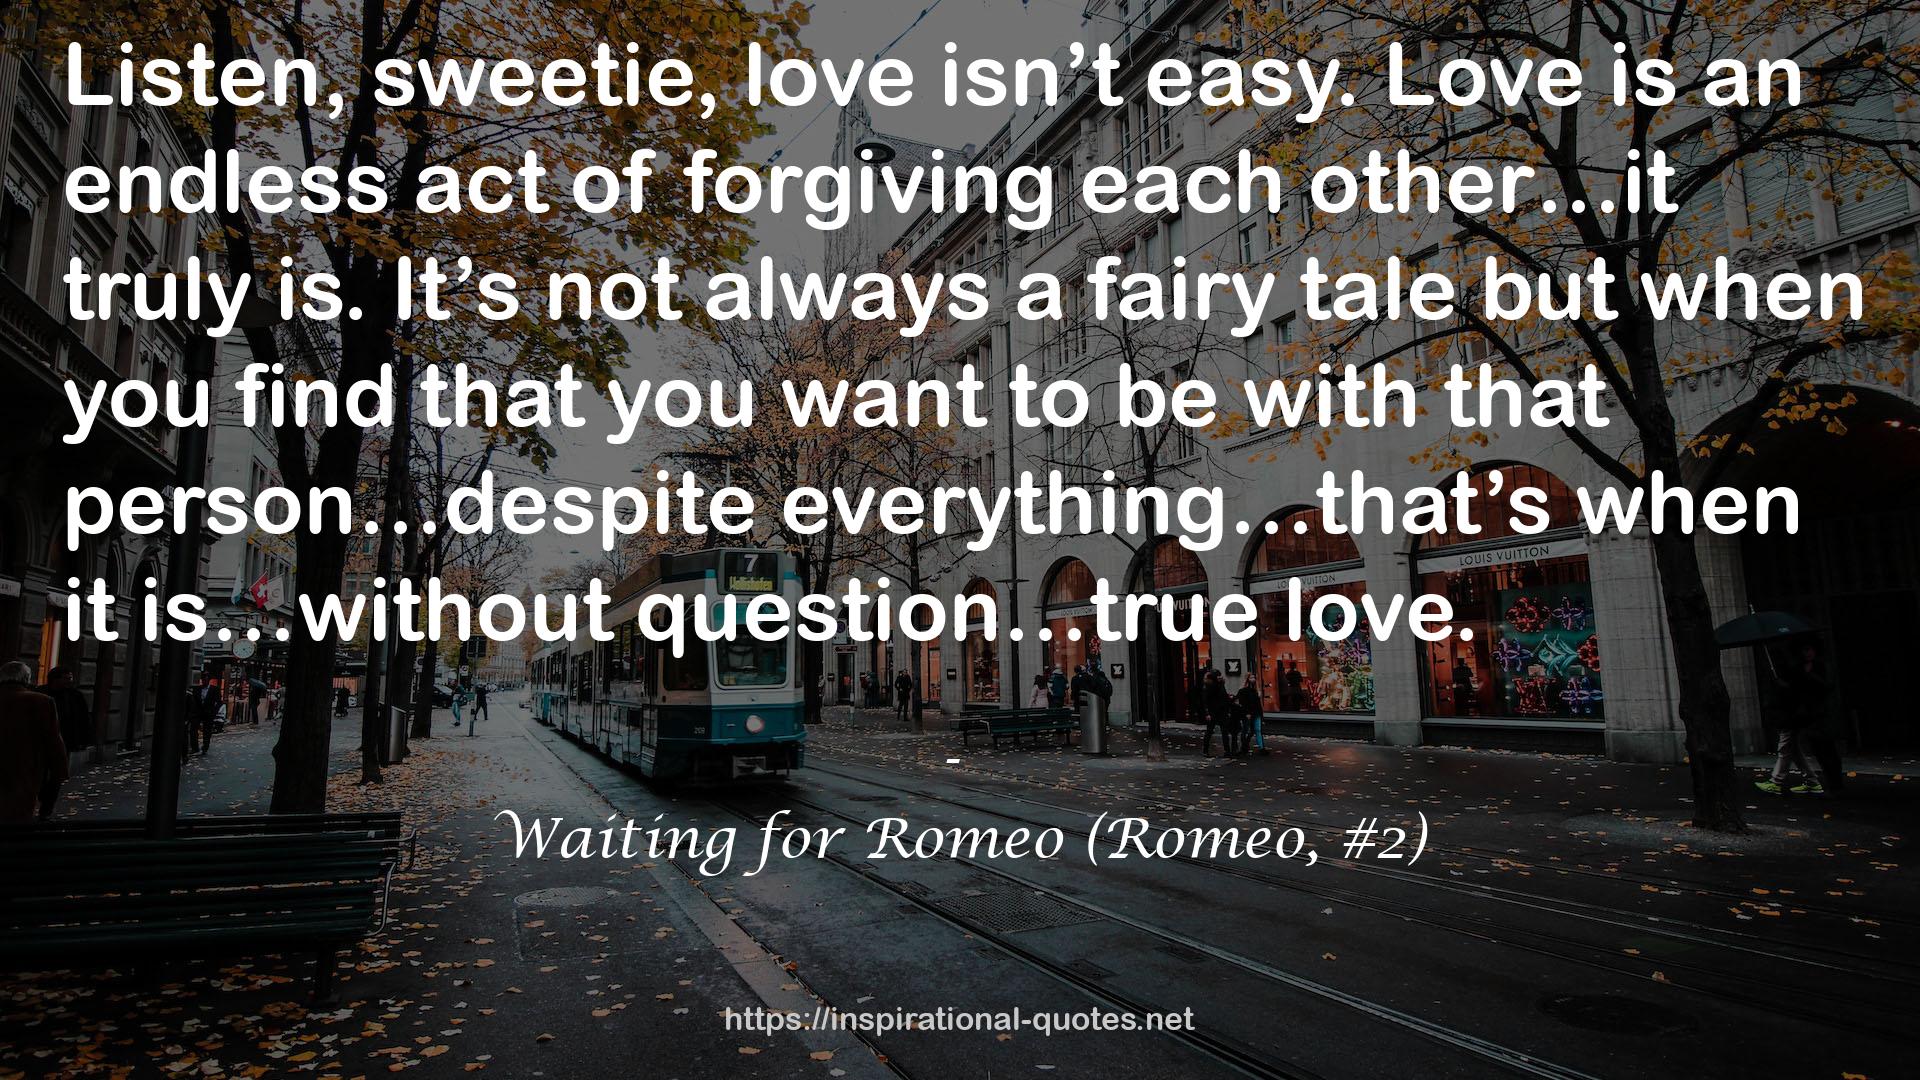 Waiting for Romeo (Romeo, #2) QUOTES